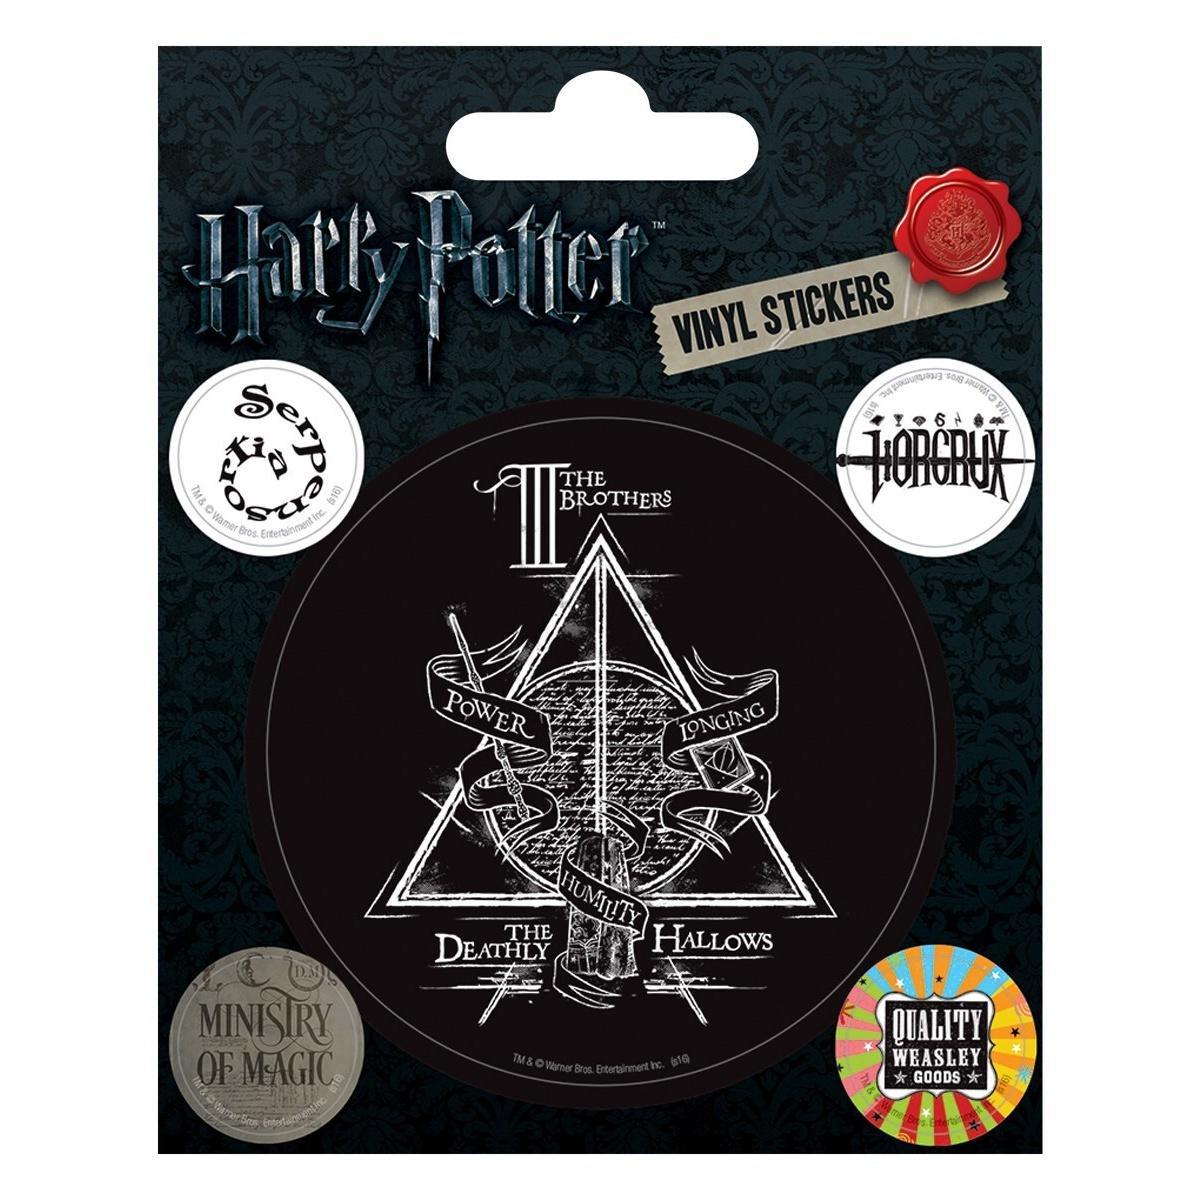 Harry Potter Vinyl Symbols Sticker (Pack of 5) (Multicoloured) (One Size)